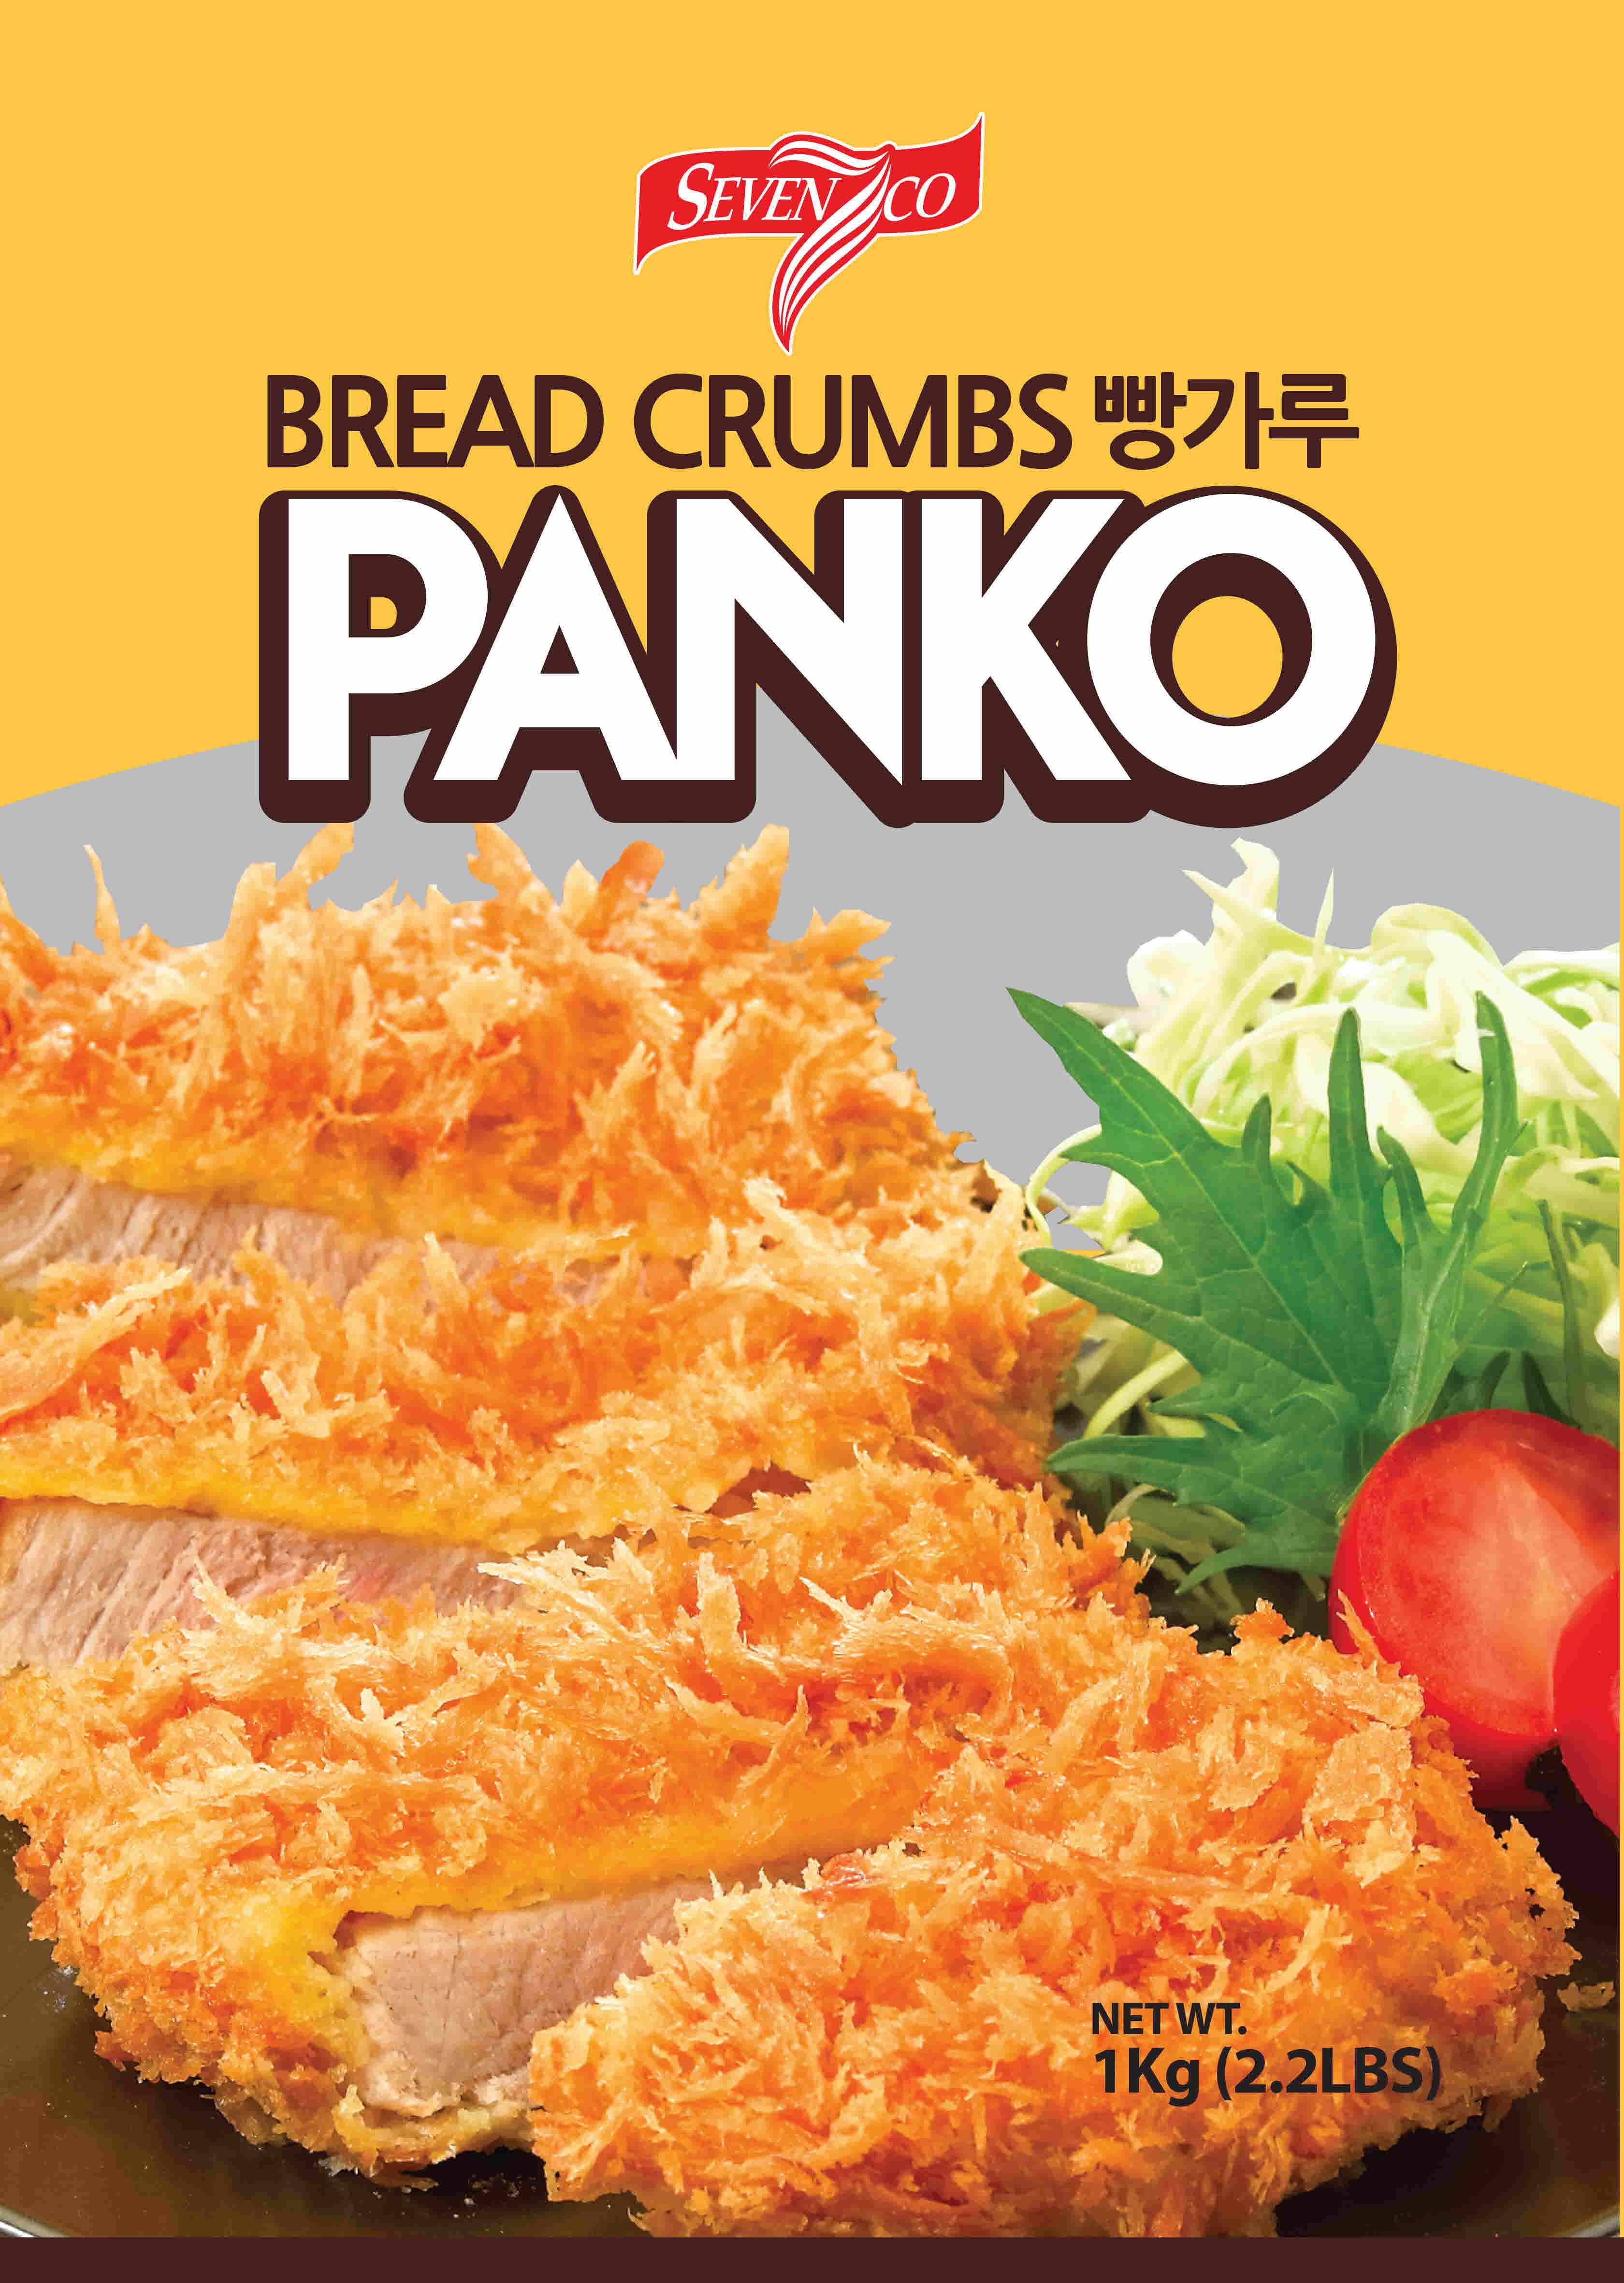 PANKO BREAD CRUMBS  SEVENCO S A 